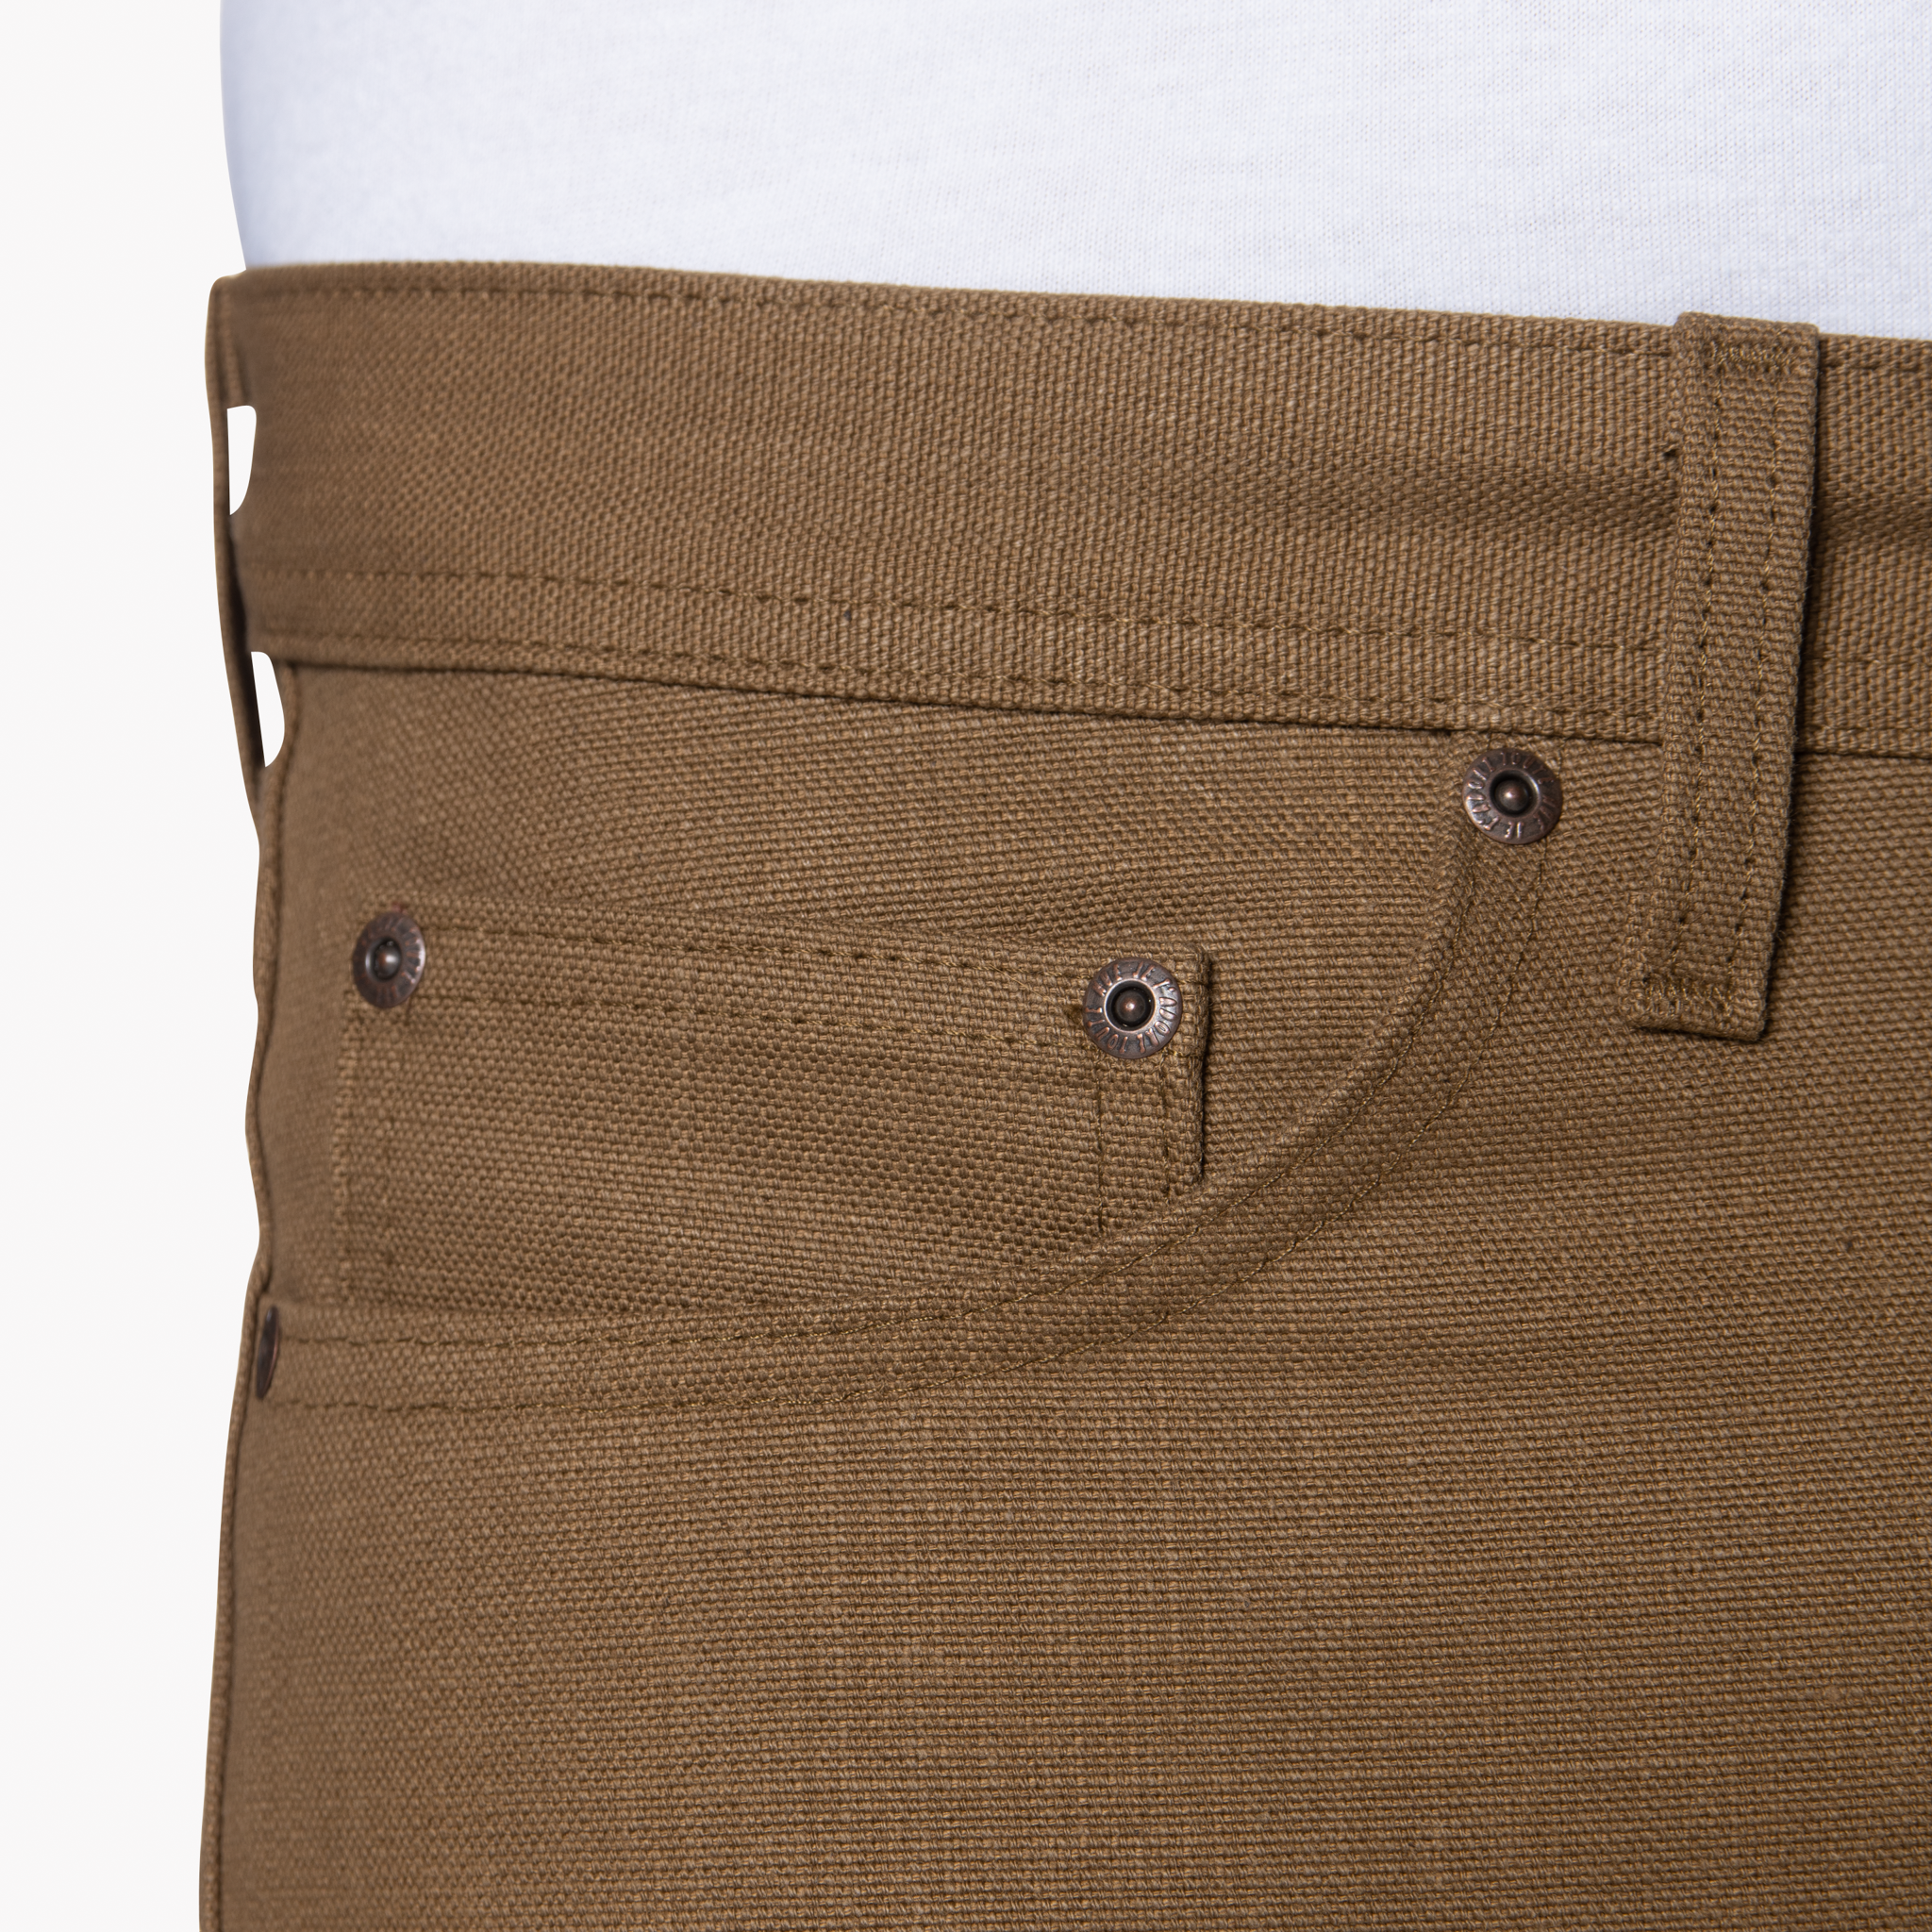  Raw Cotton Canvas - Brown - coin pocket 